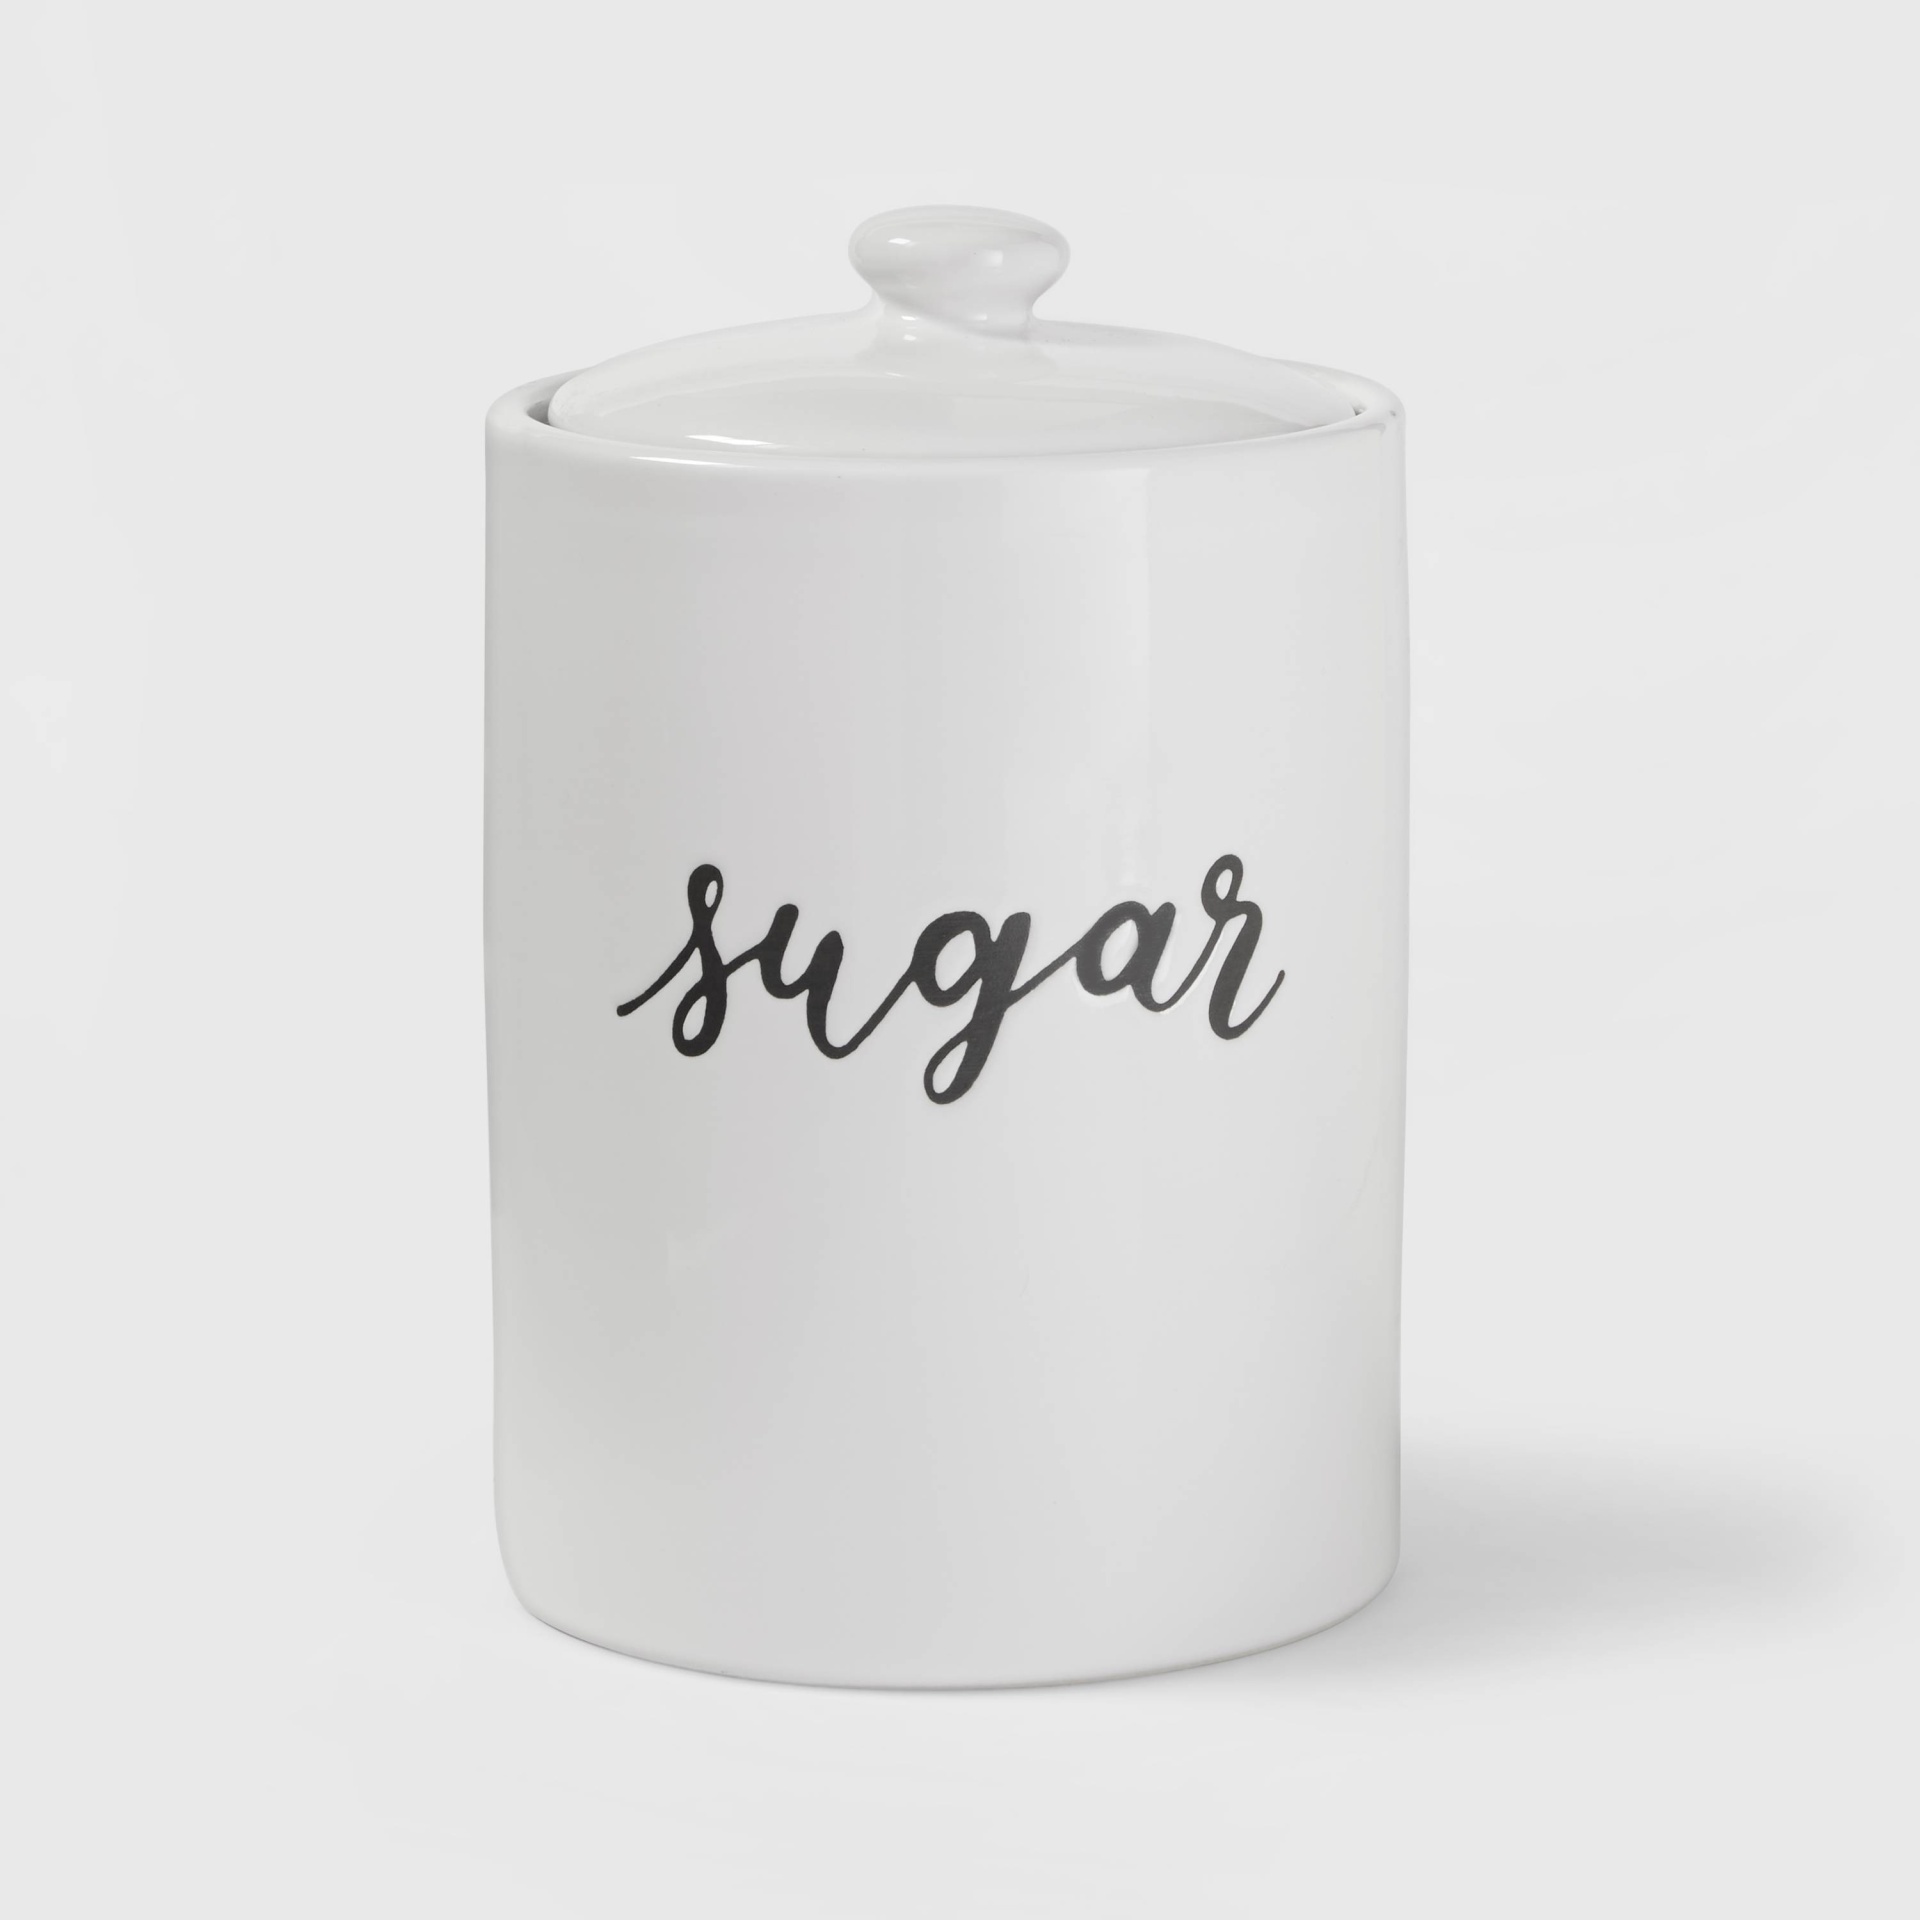 Sugar Food Storage Canister White - Threshold 1 ct